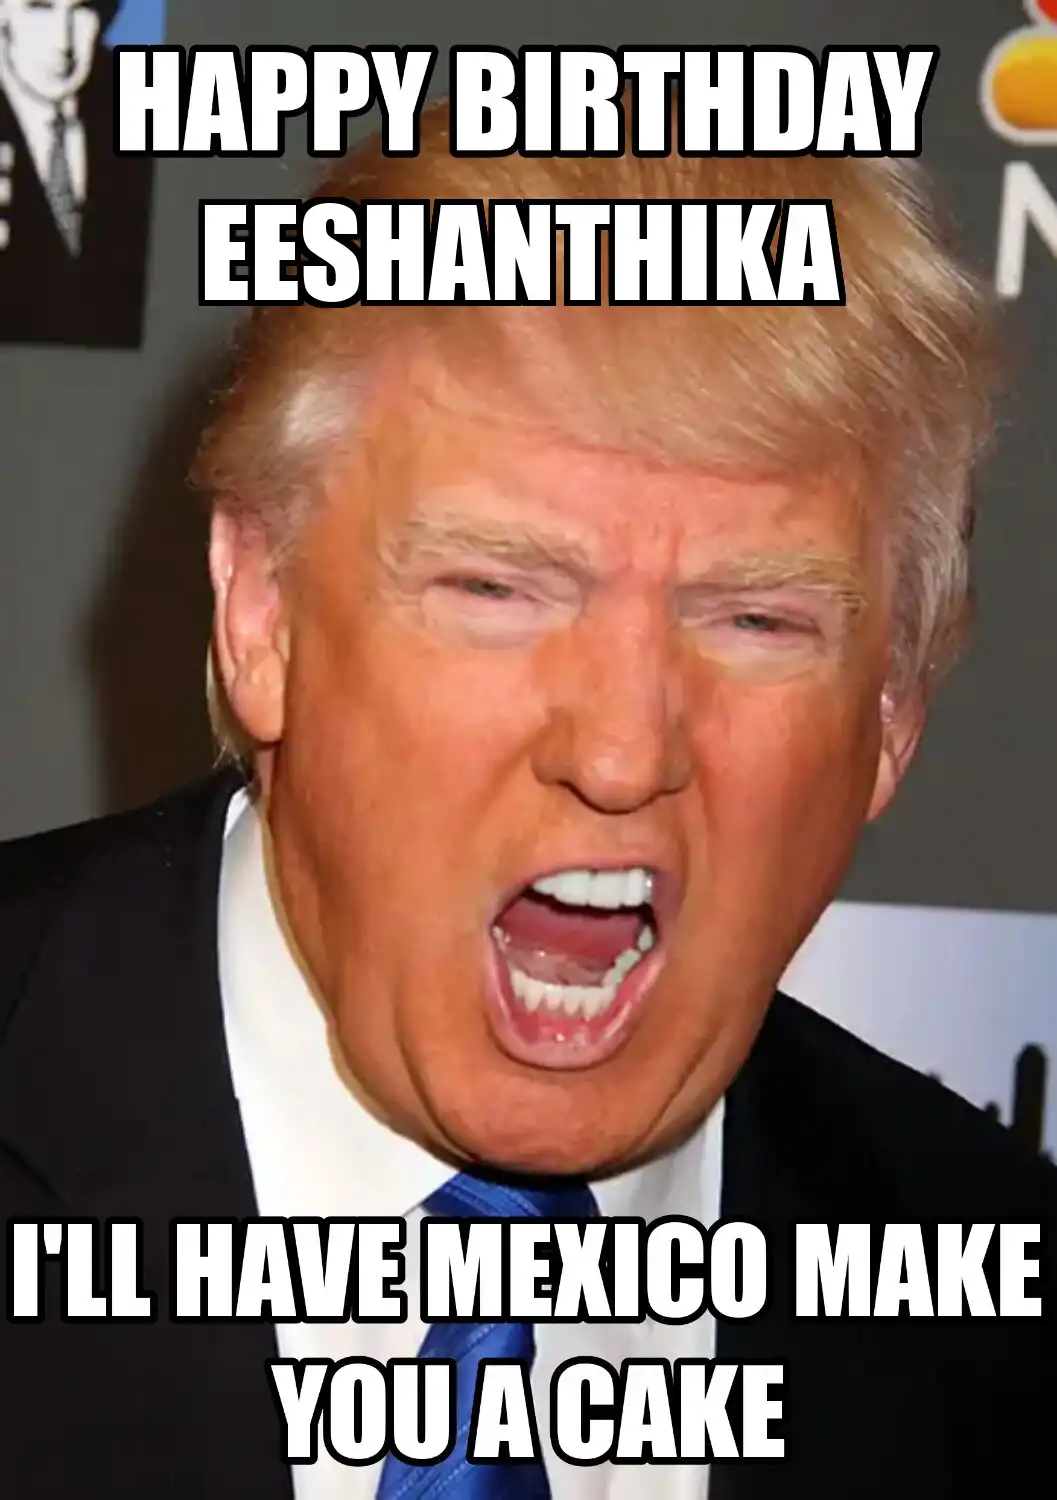 Happy Birthday Eeshanthika Mexico Make You A Cake Meme